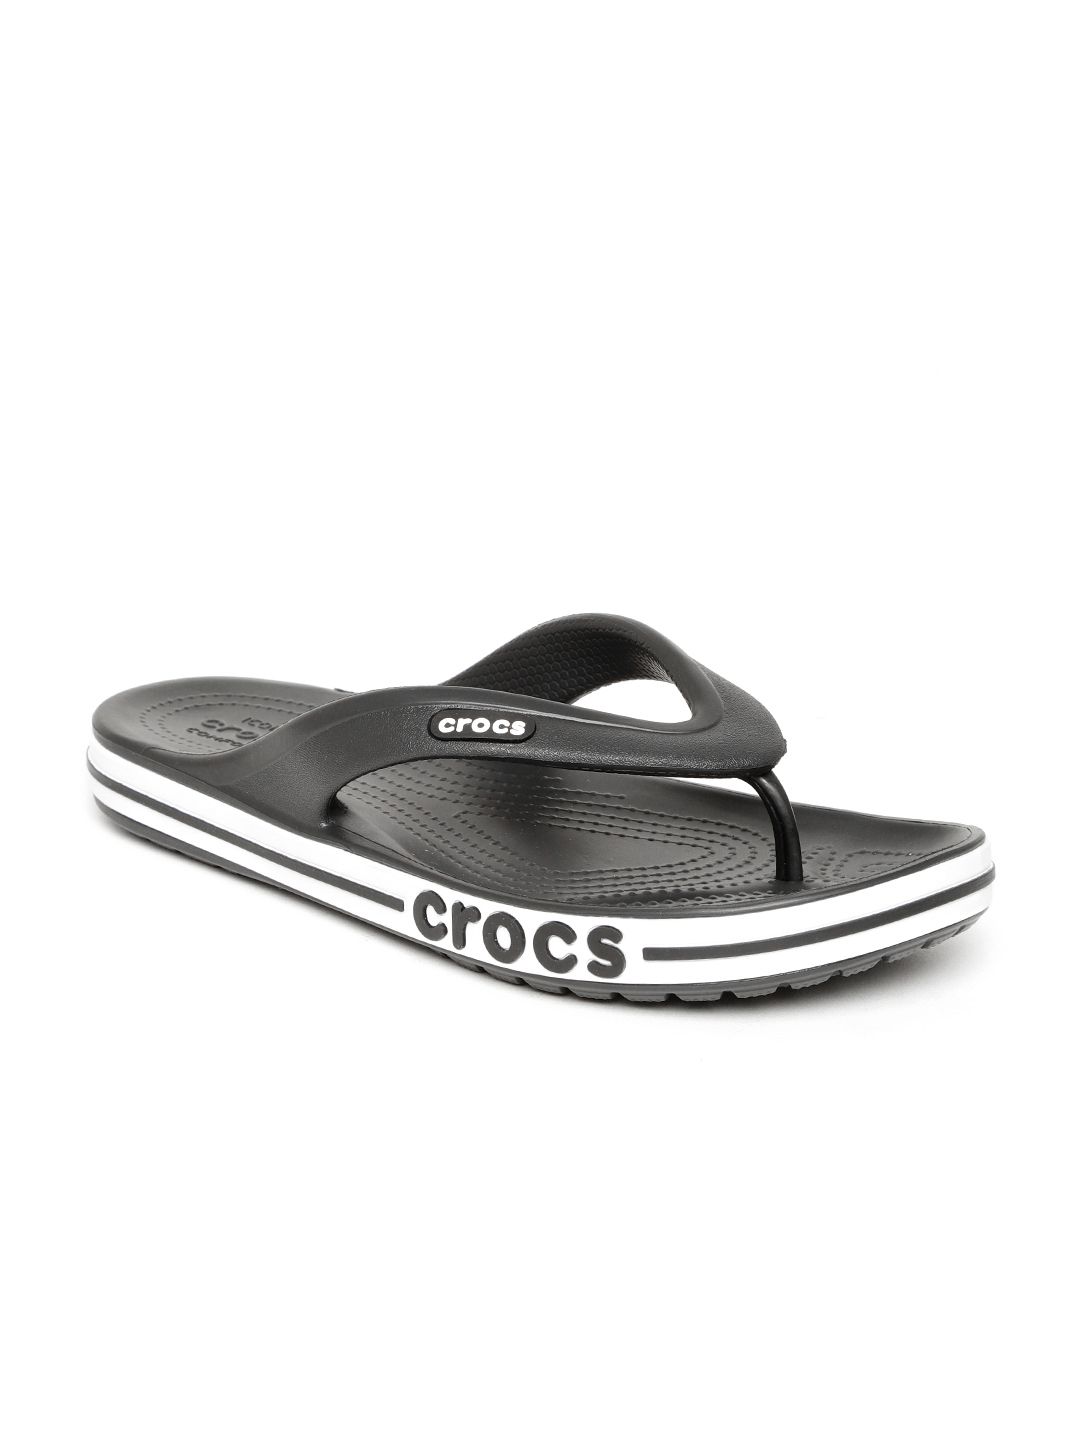 Crocs Unisex Black Solid Thong Flip-Flops Price in India